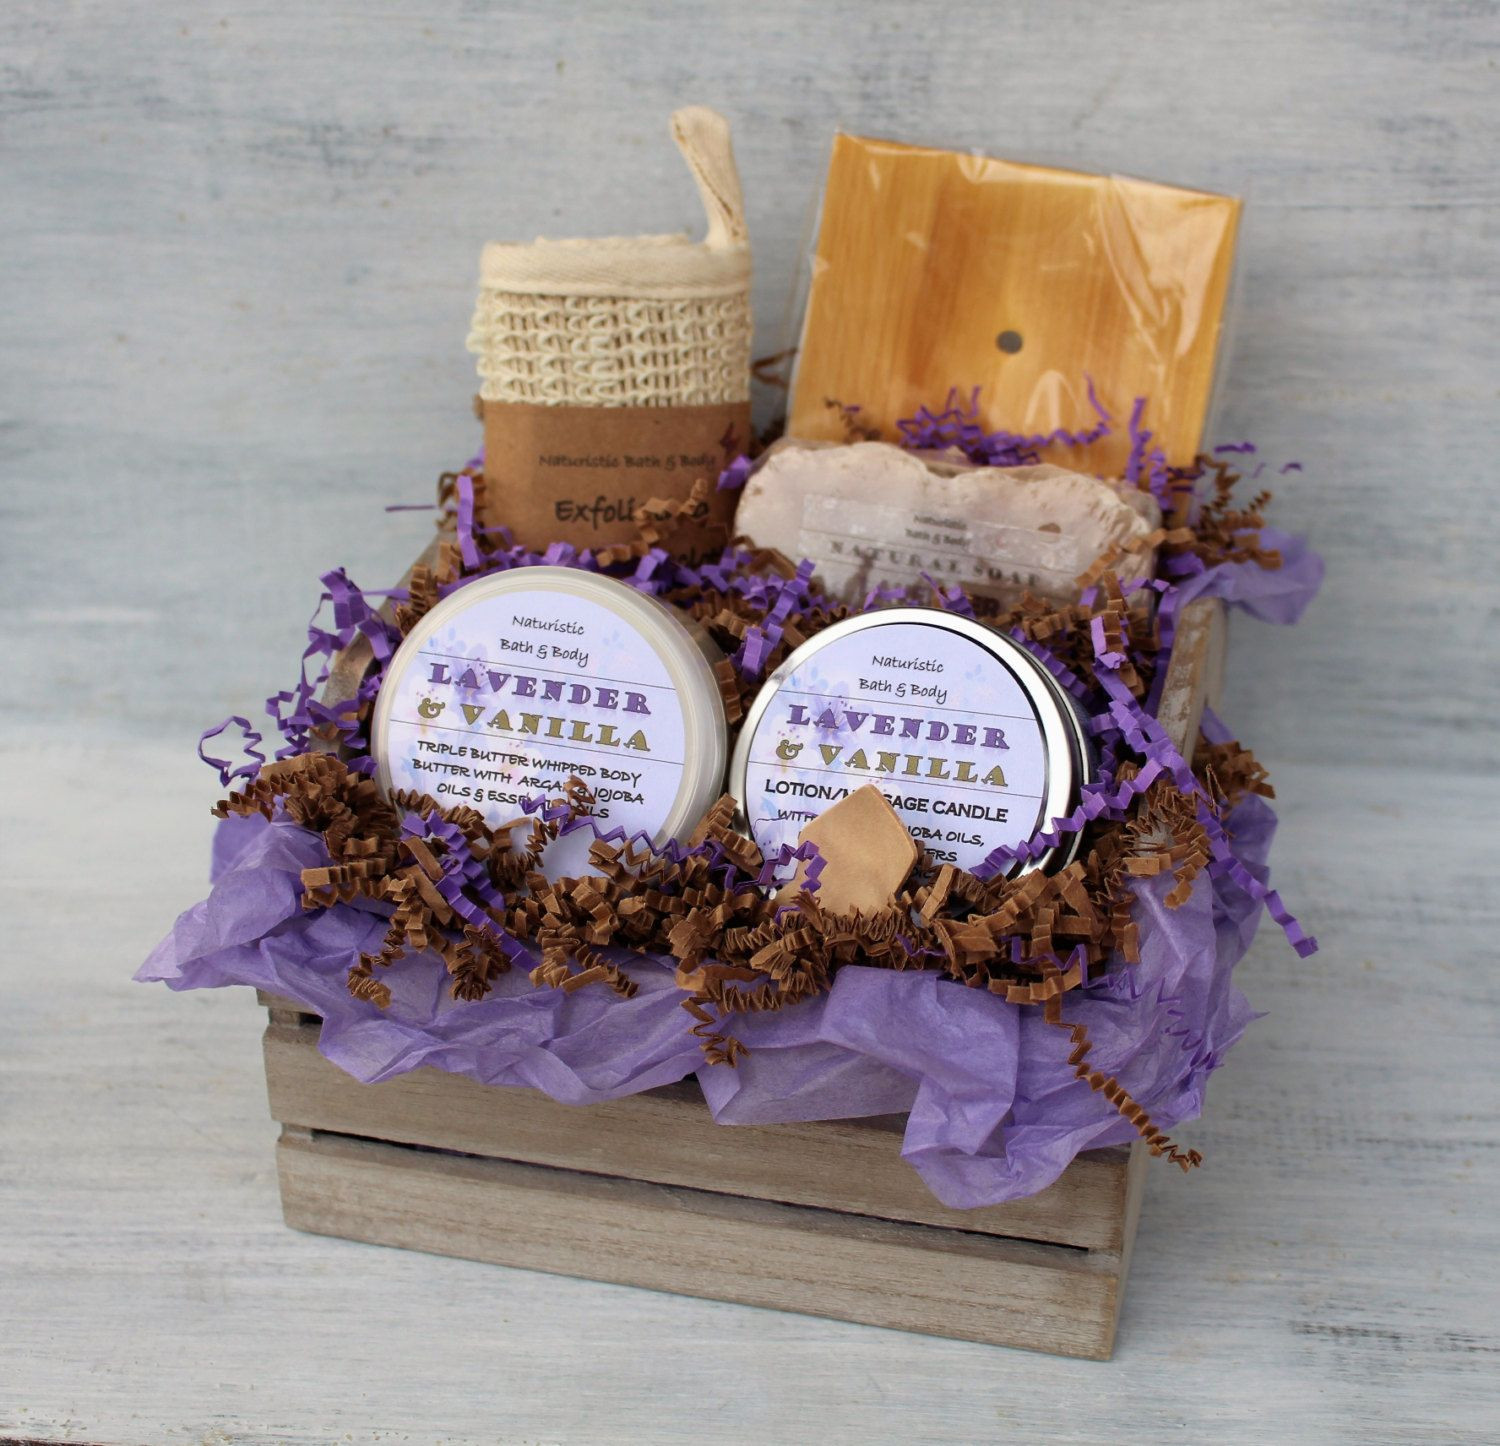 Soap Gift Basket Ideas
 Lavender Vanilla Bath & Body Gift Basket Spa Gift Set